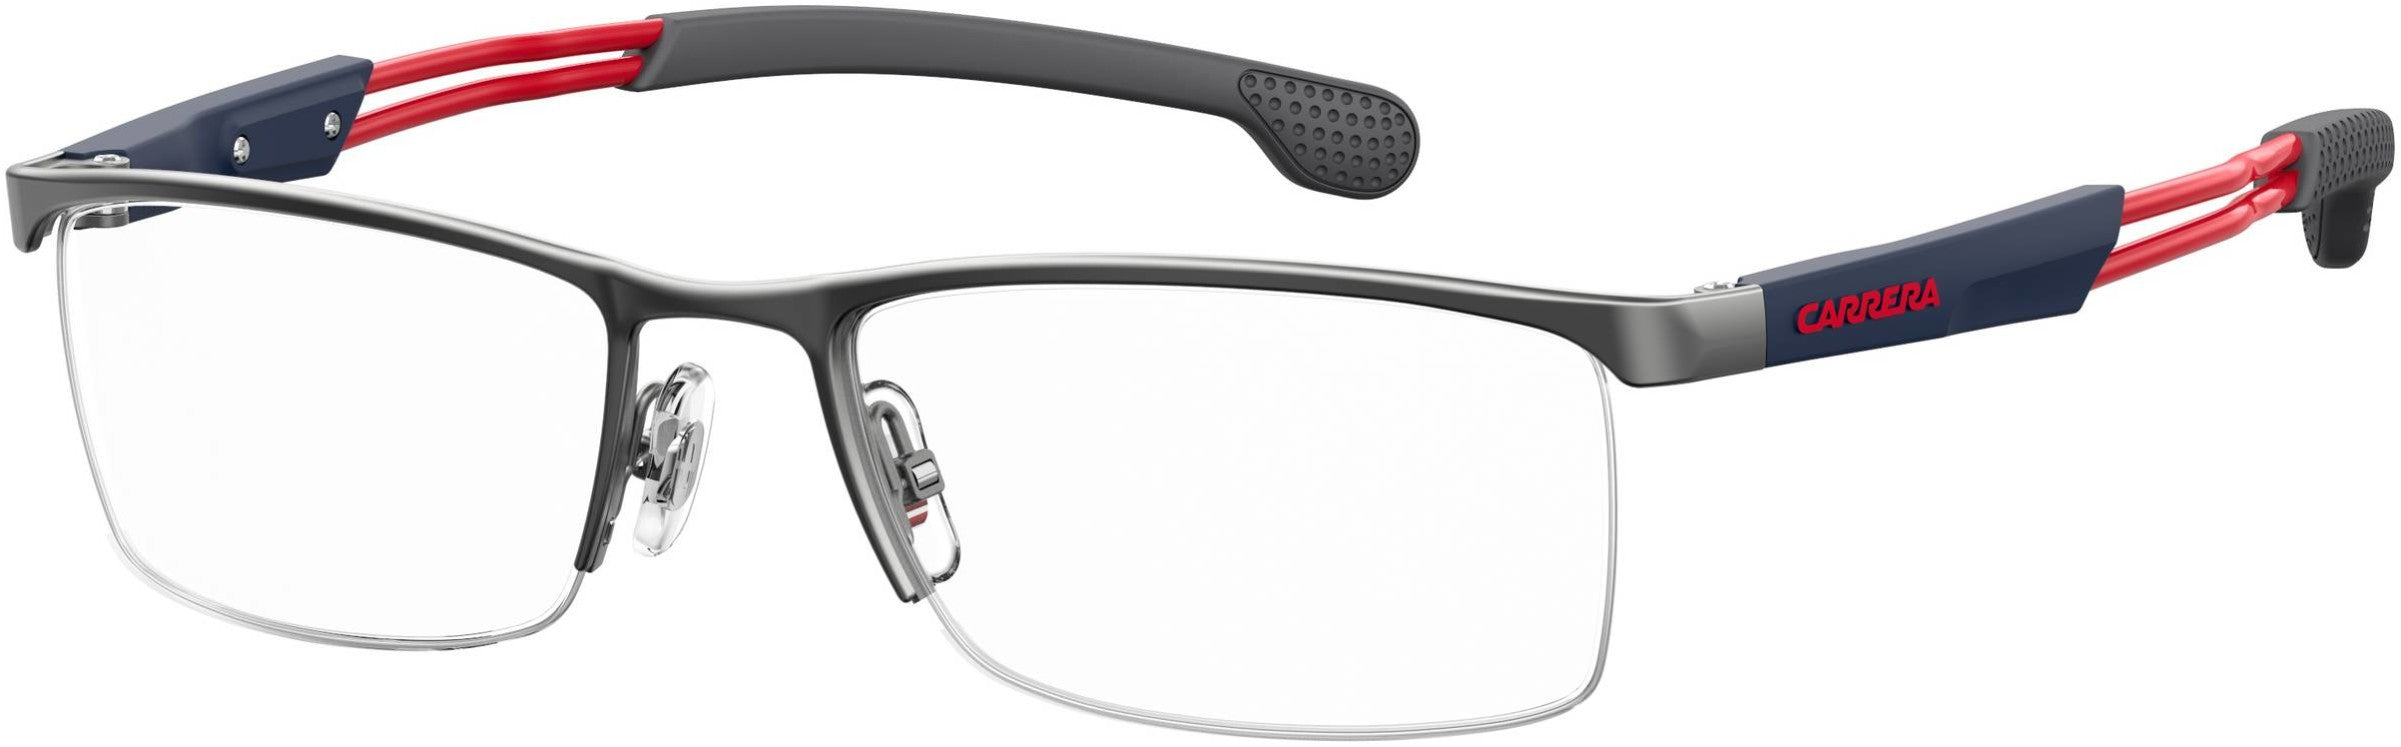  Carrera 4408 Rectangular Eyeglasses 0R81-0R81  Matte Ruthenium (00 Demo Lens)